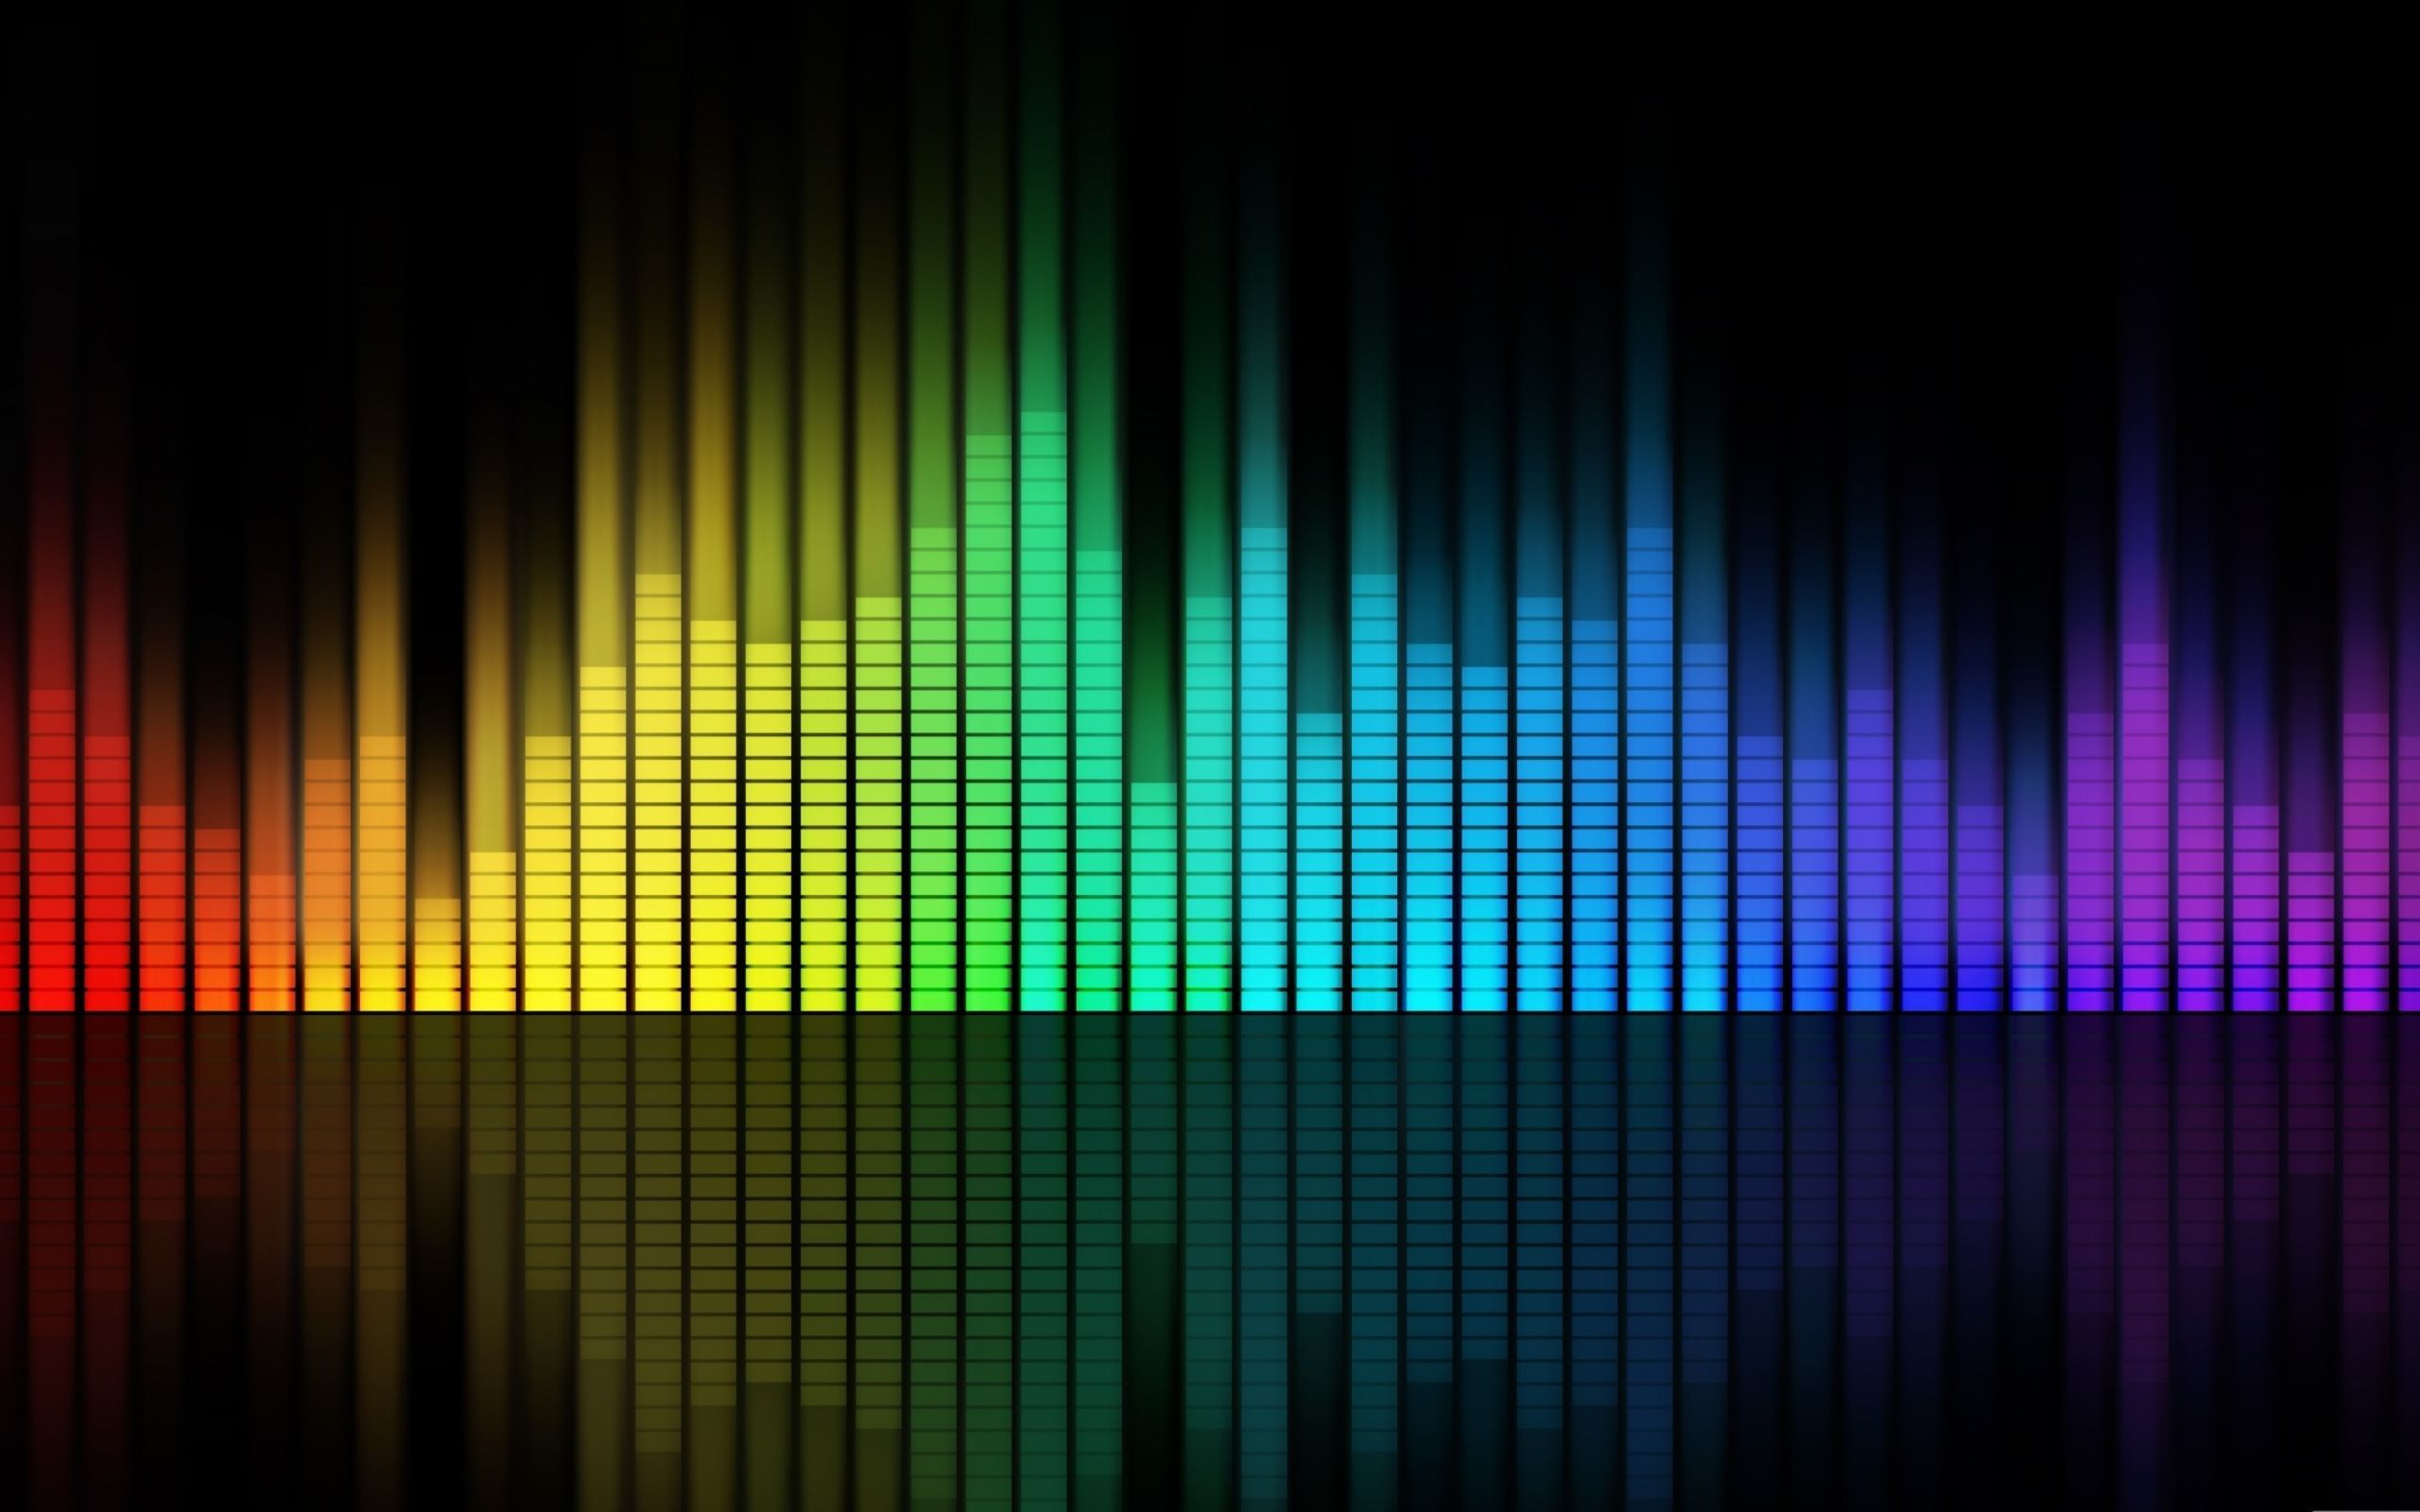 Music Equalizer Mac Wallpaper Download | Free Mac Wallpapers Download